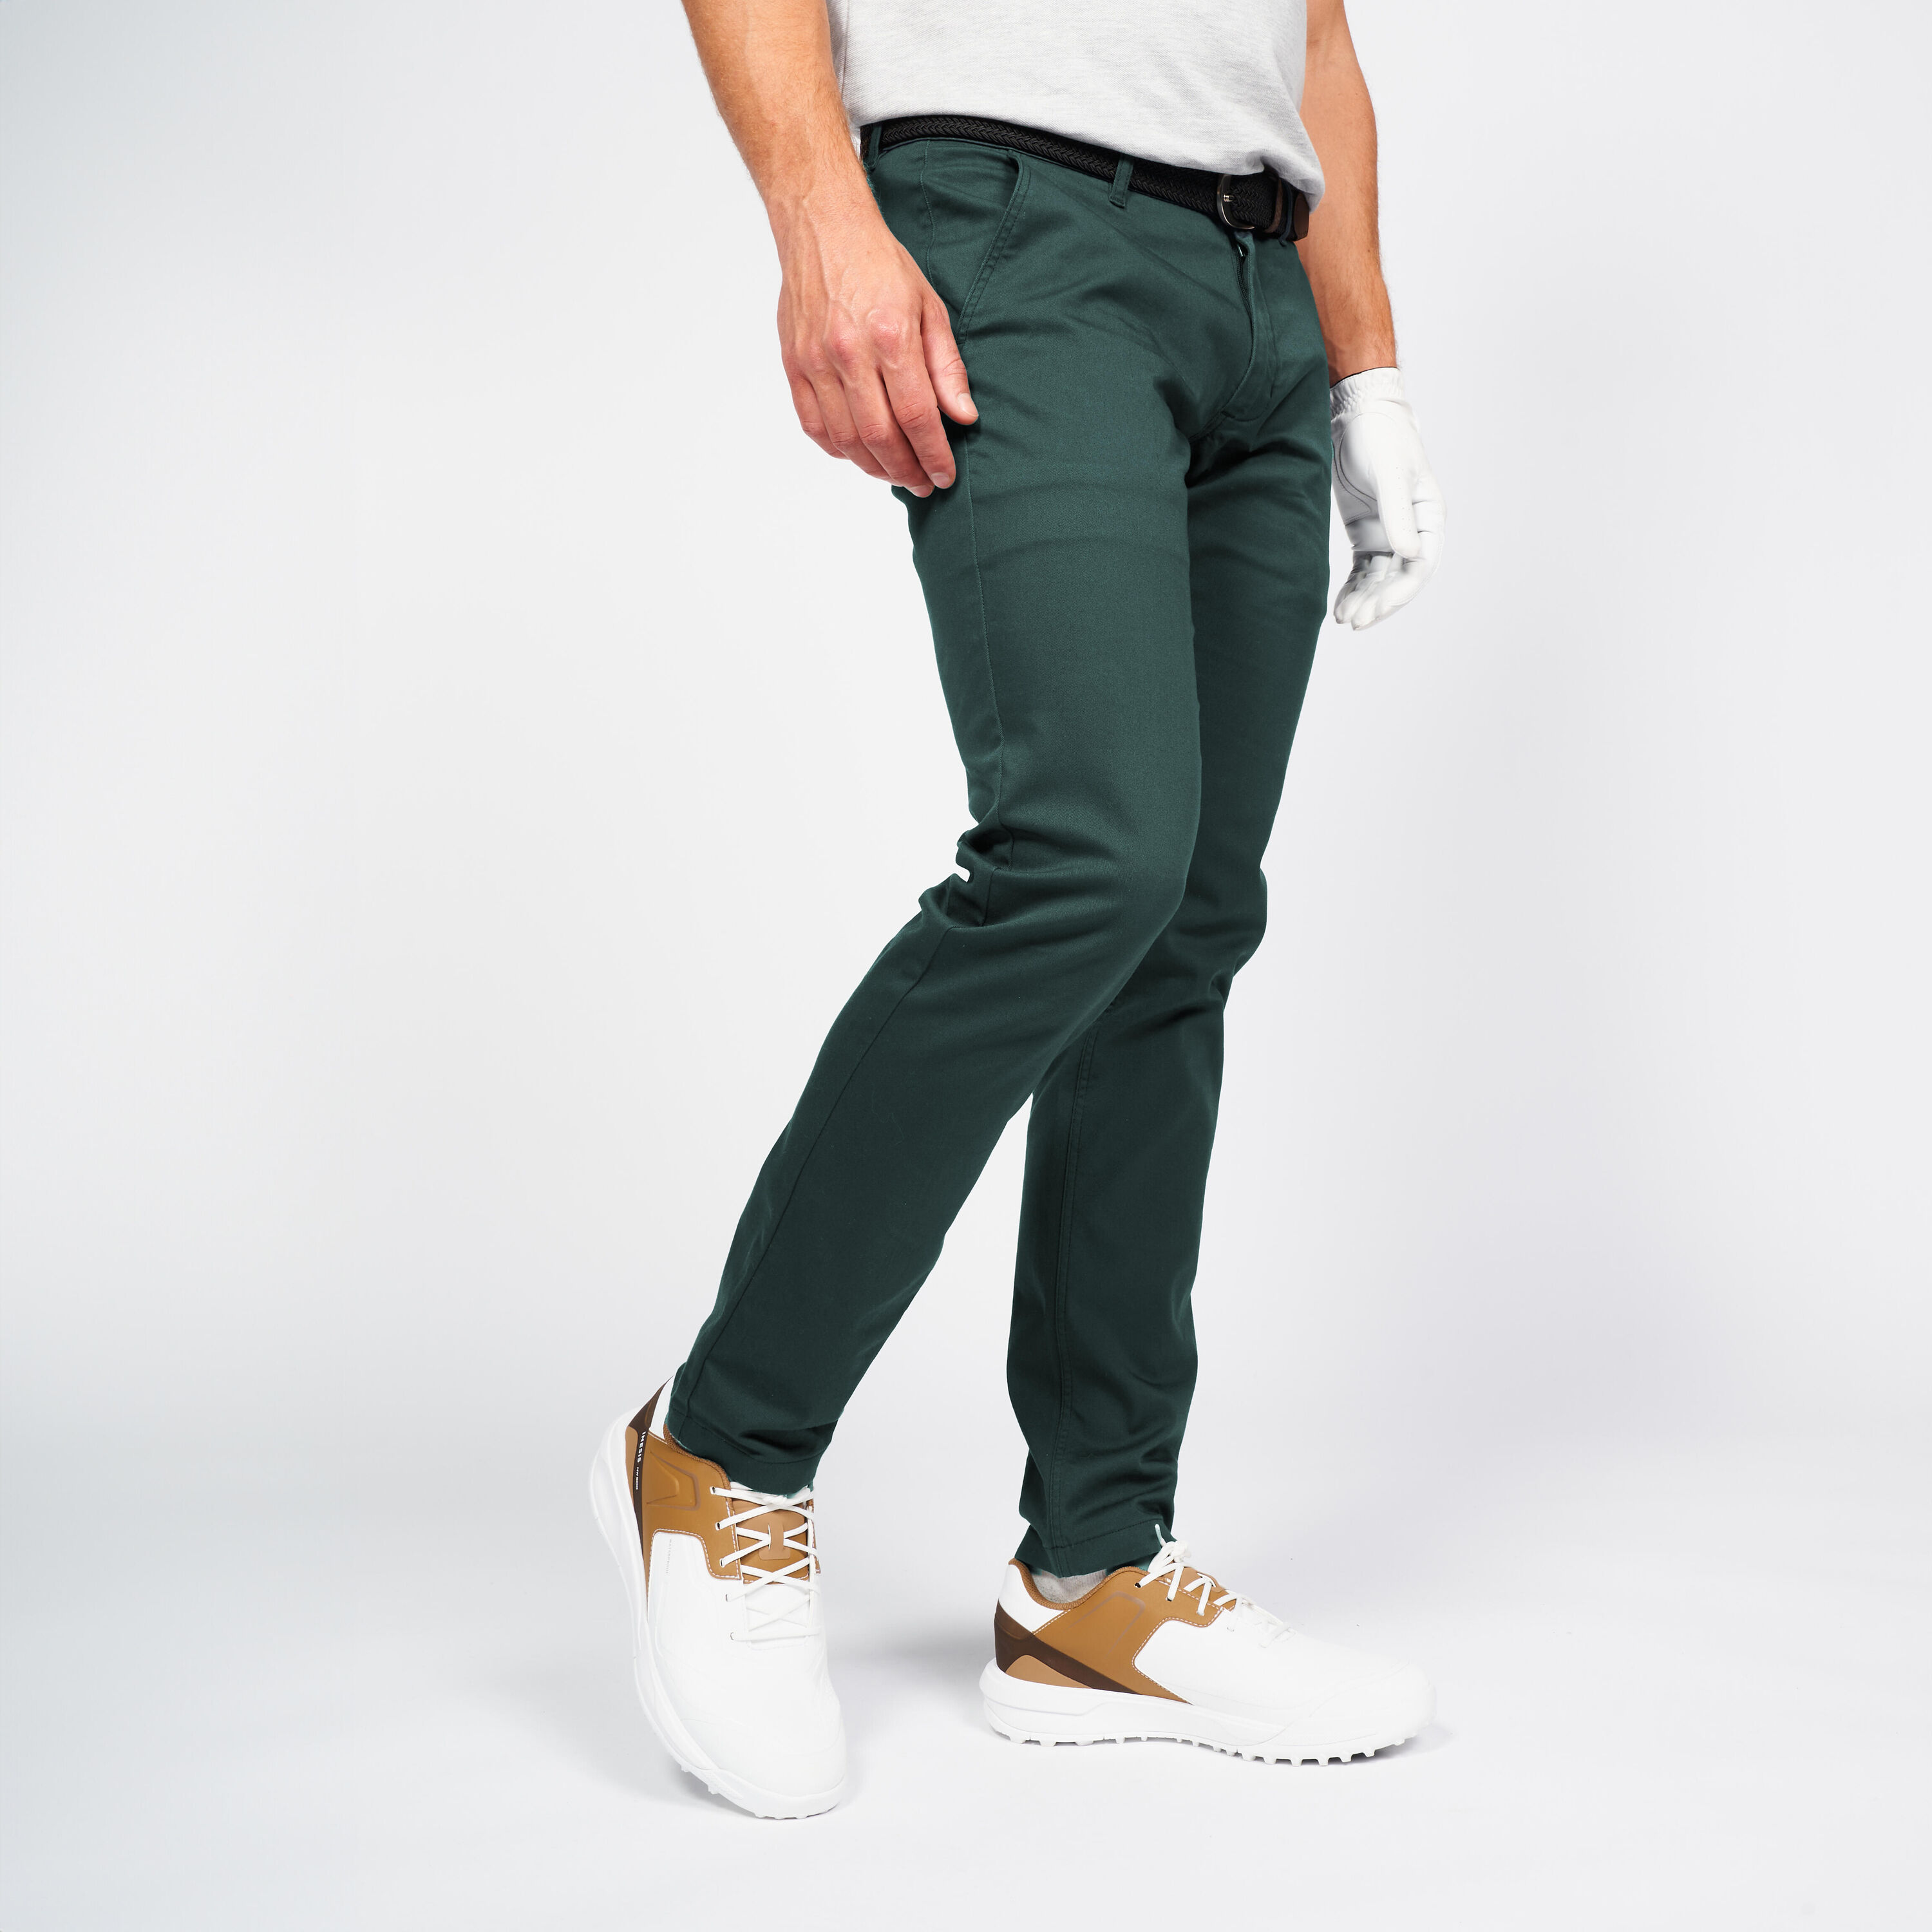 INESIS Men's golf trousers - MW500 green